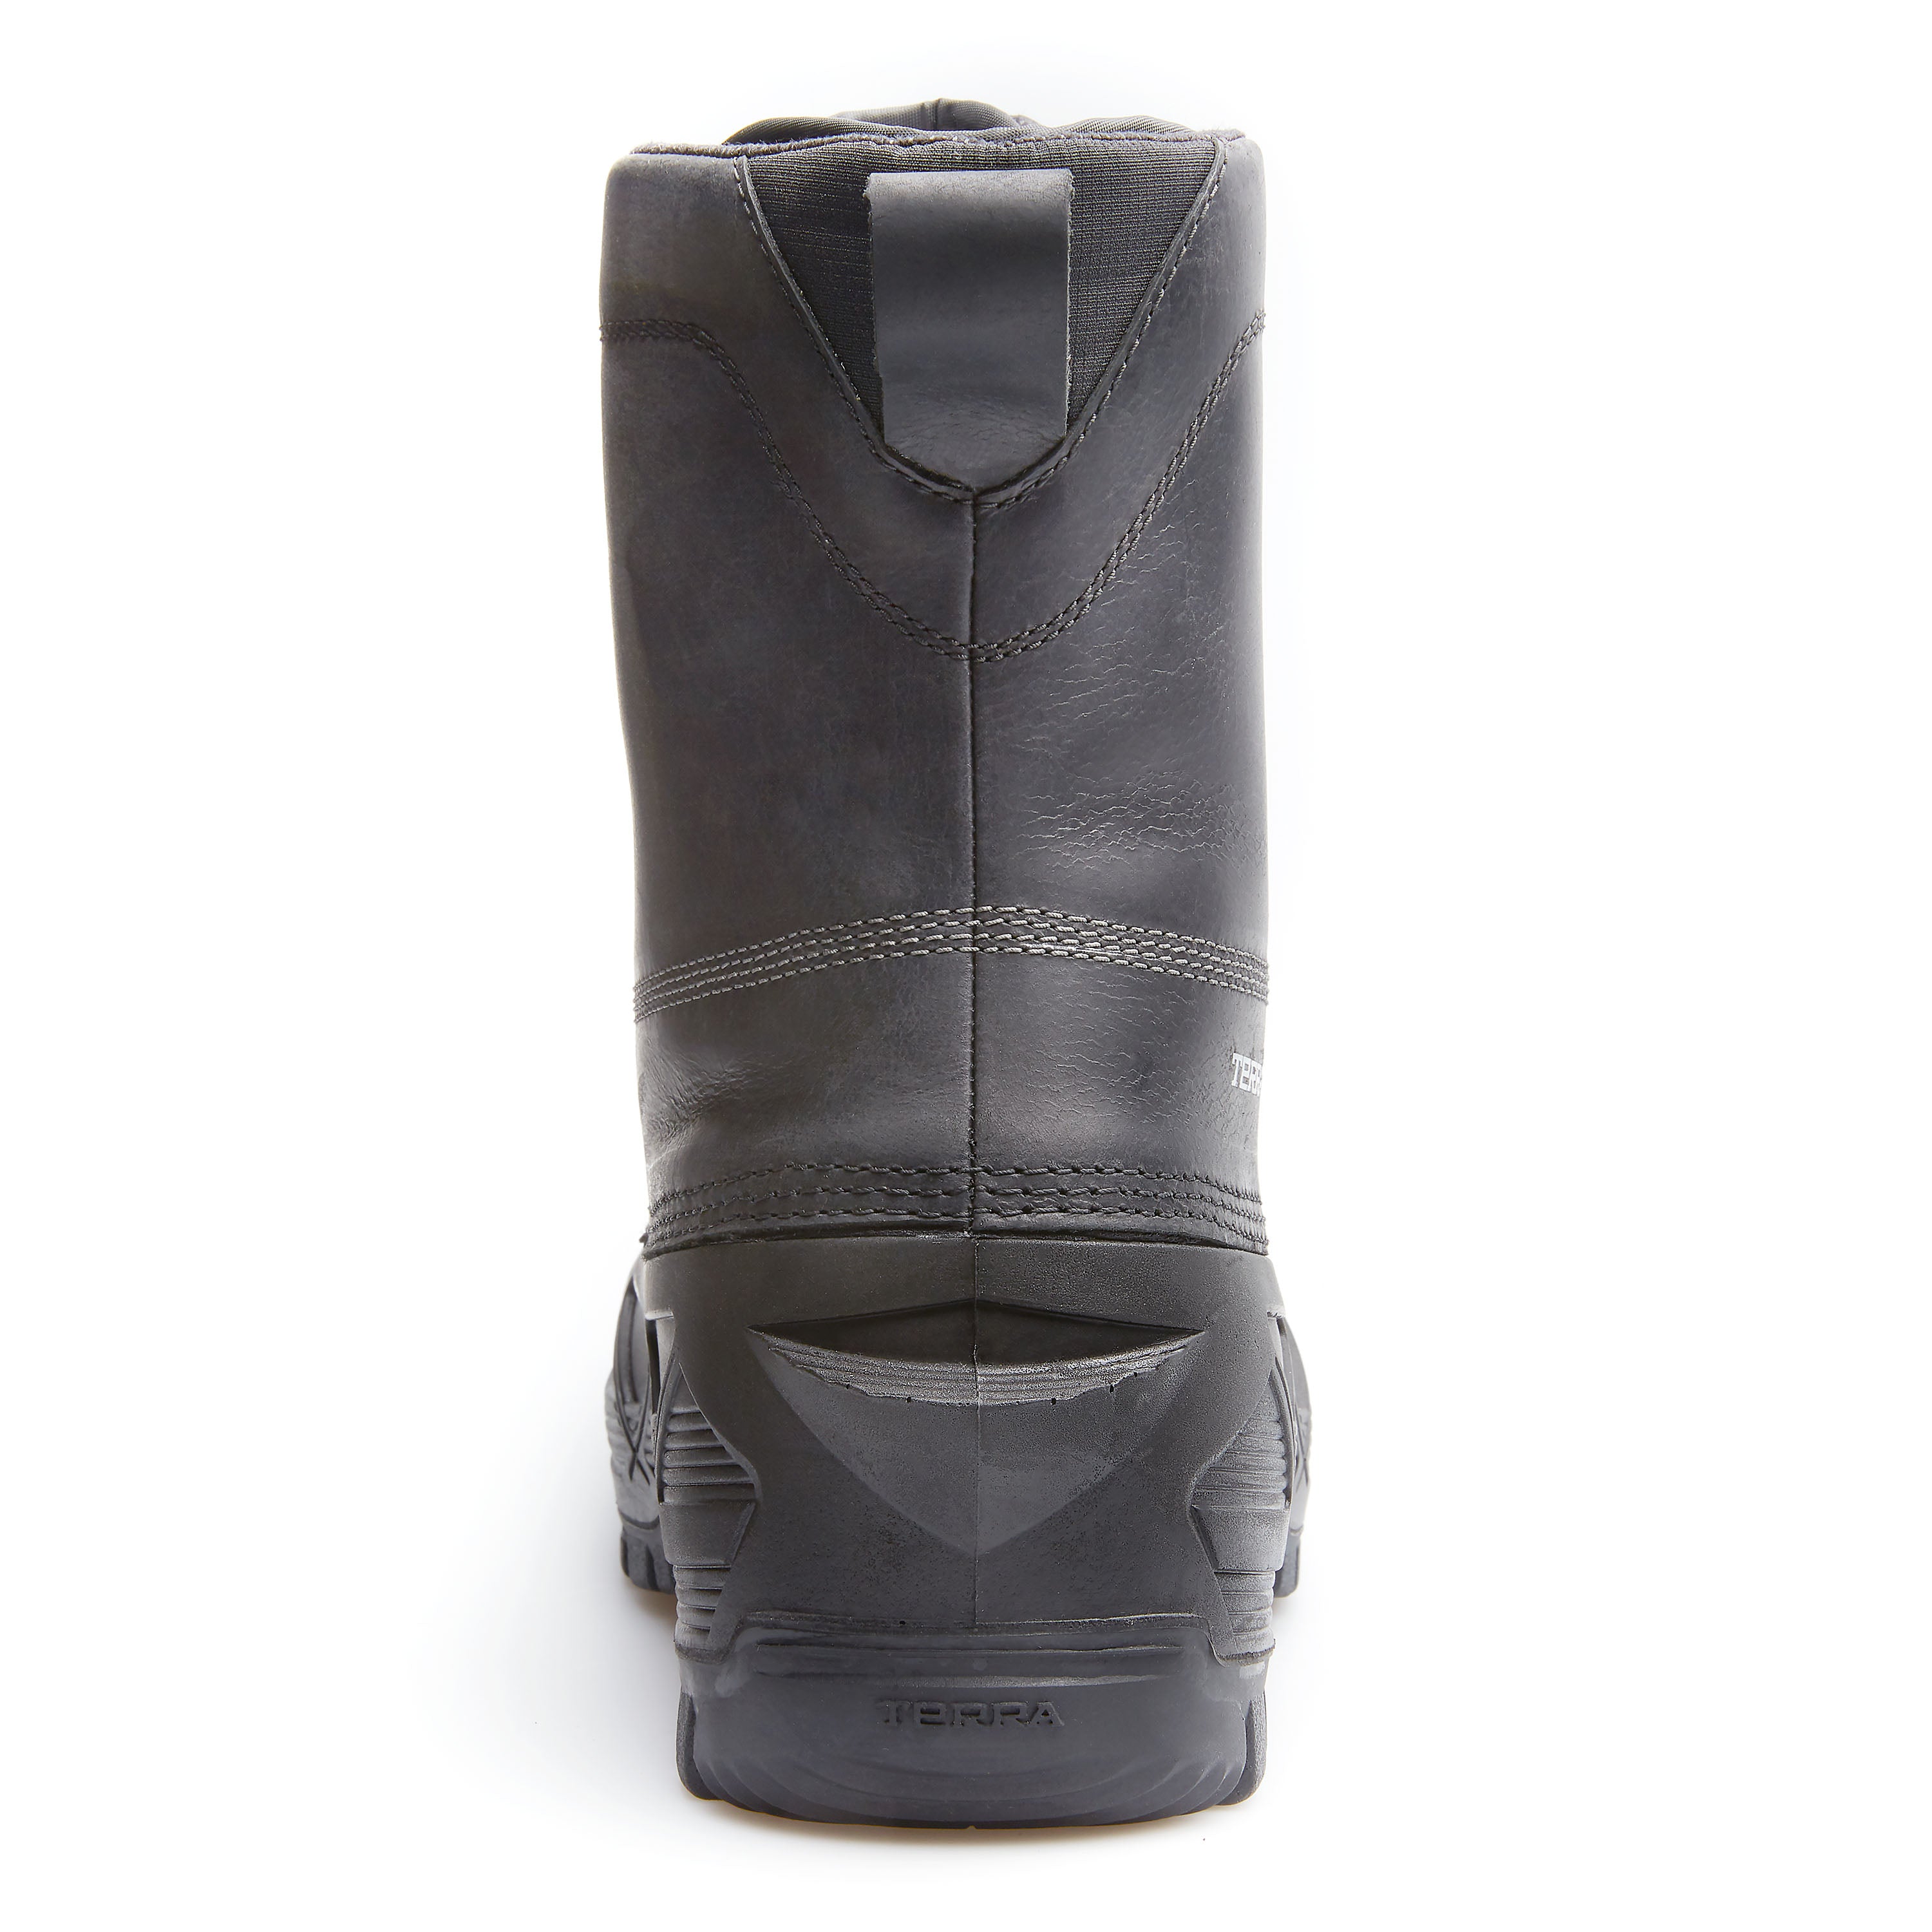 Terra Crossbeam Composite Toe Men's Winter Safety Work Boots | Black | Sizes 4 - 16 Work Boots - Cleanflow